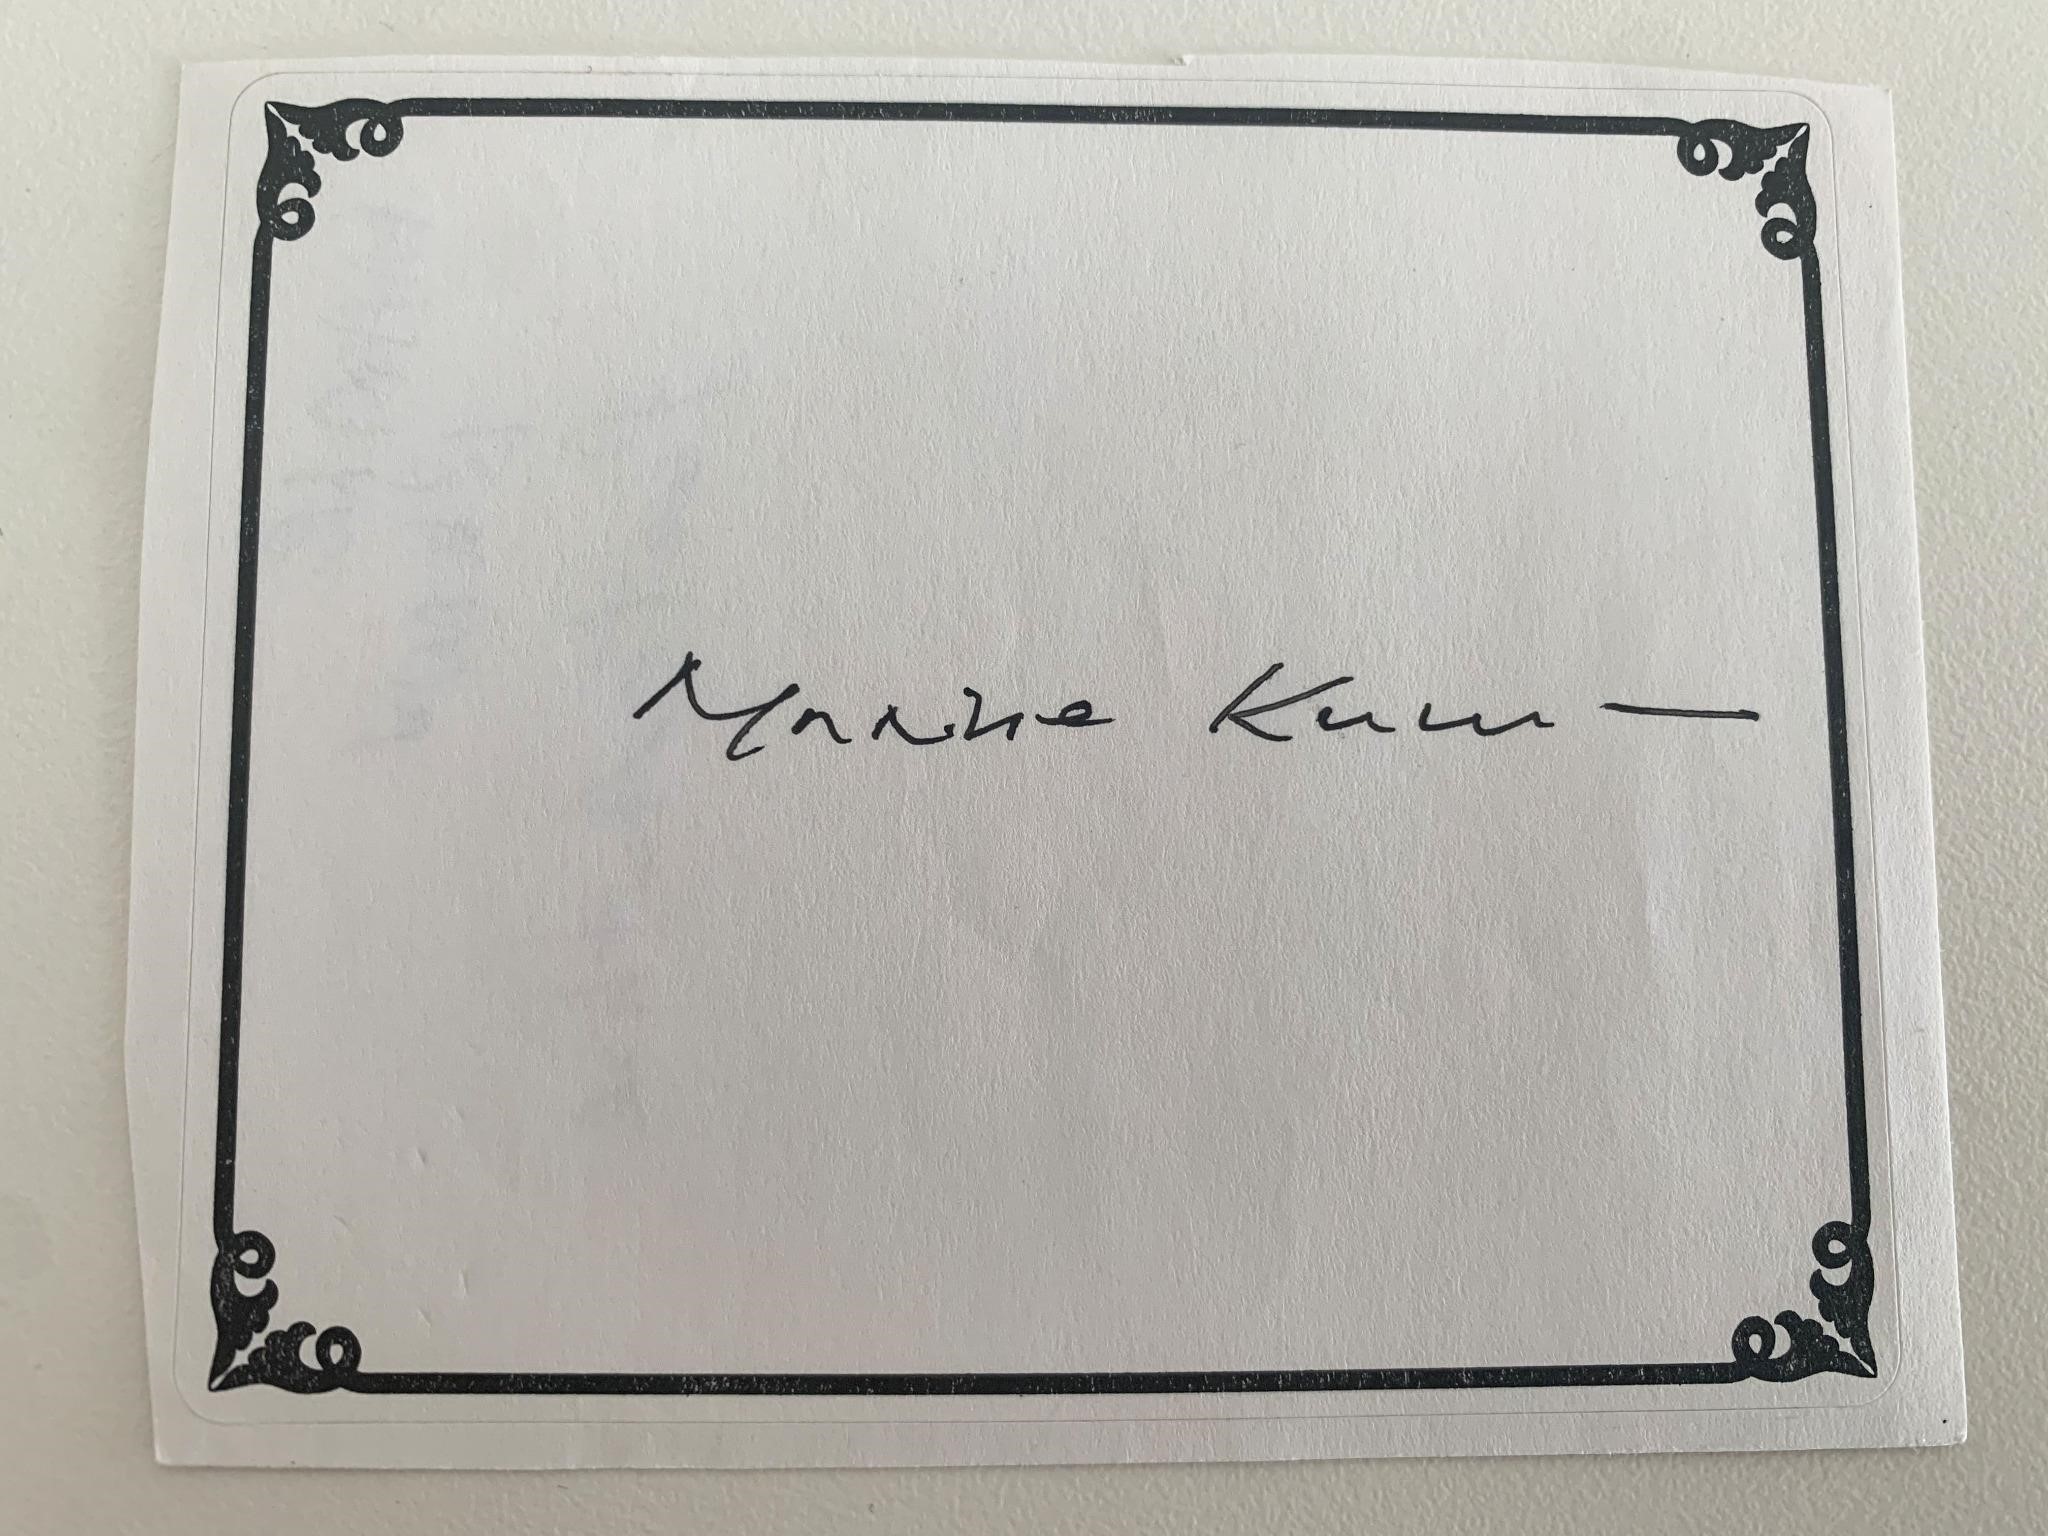 Maxine Kumin original signature